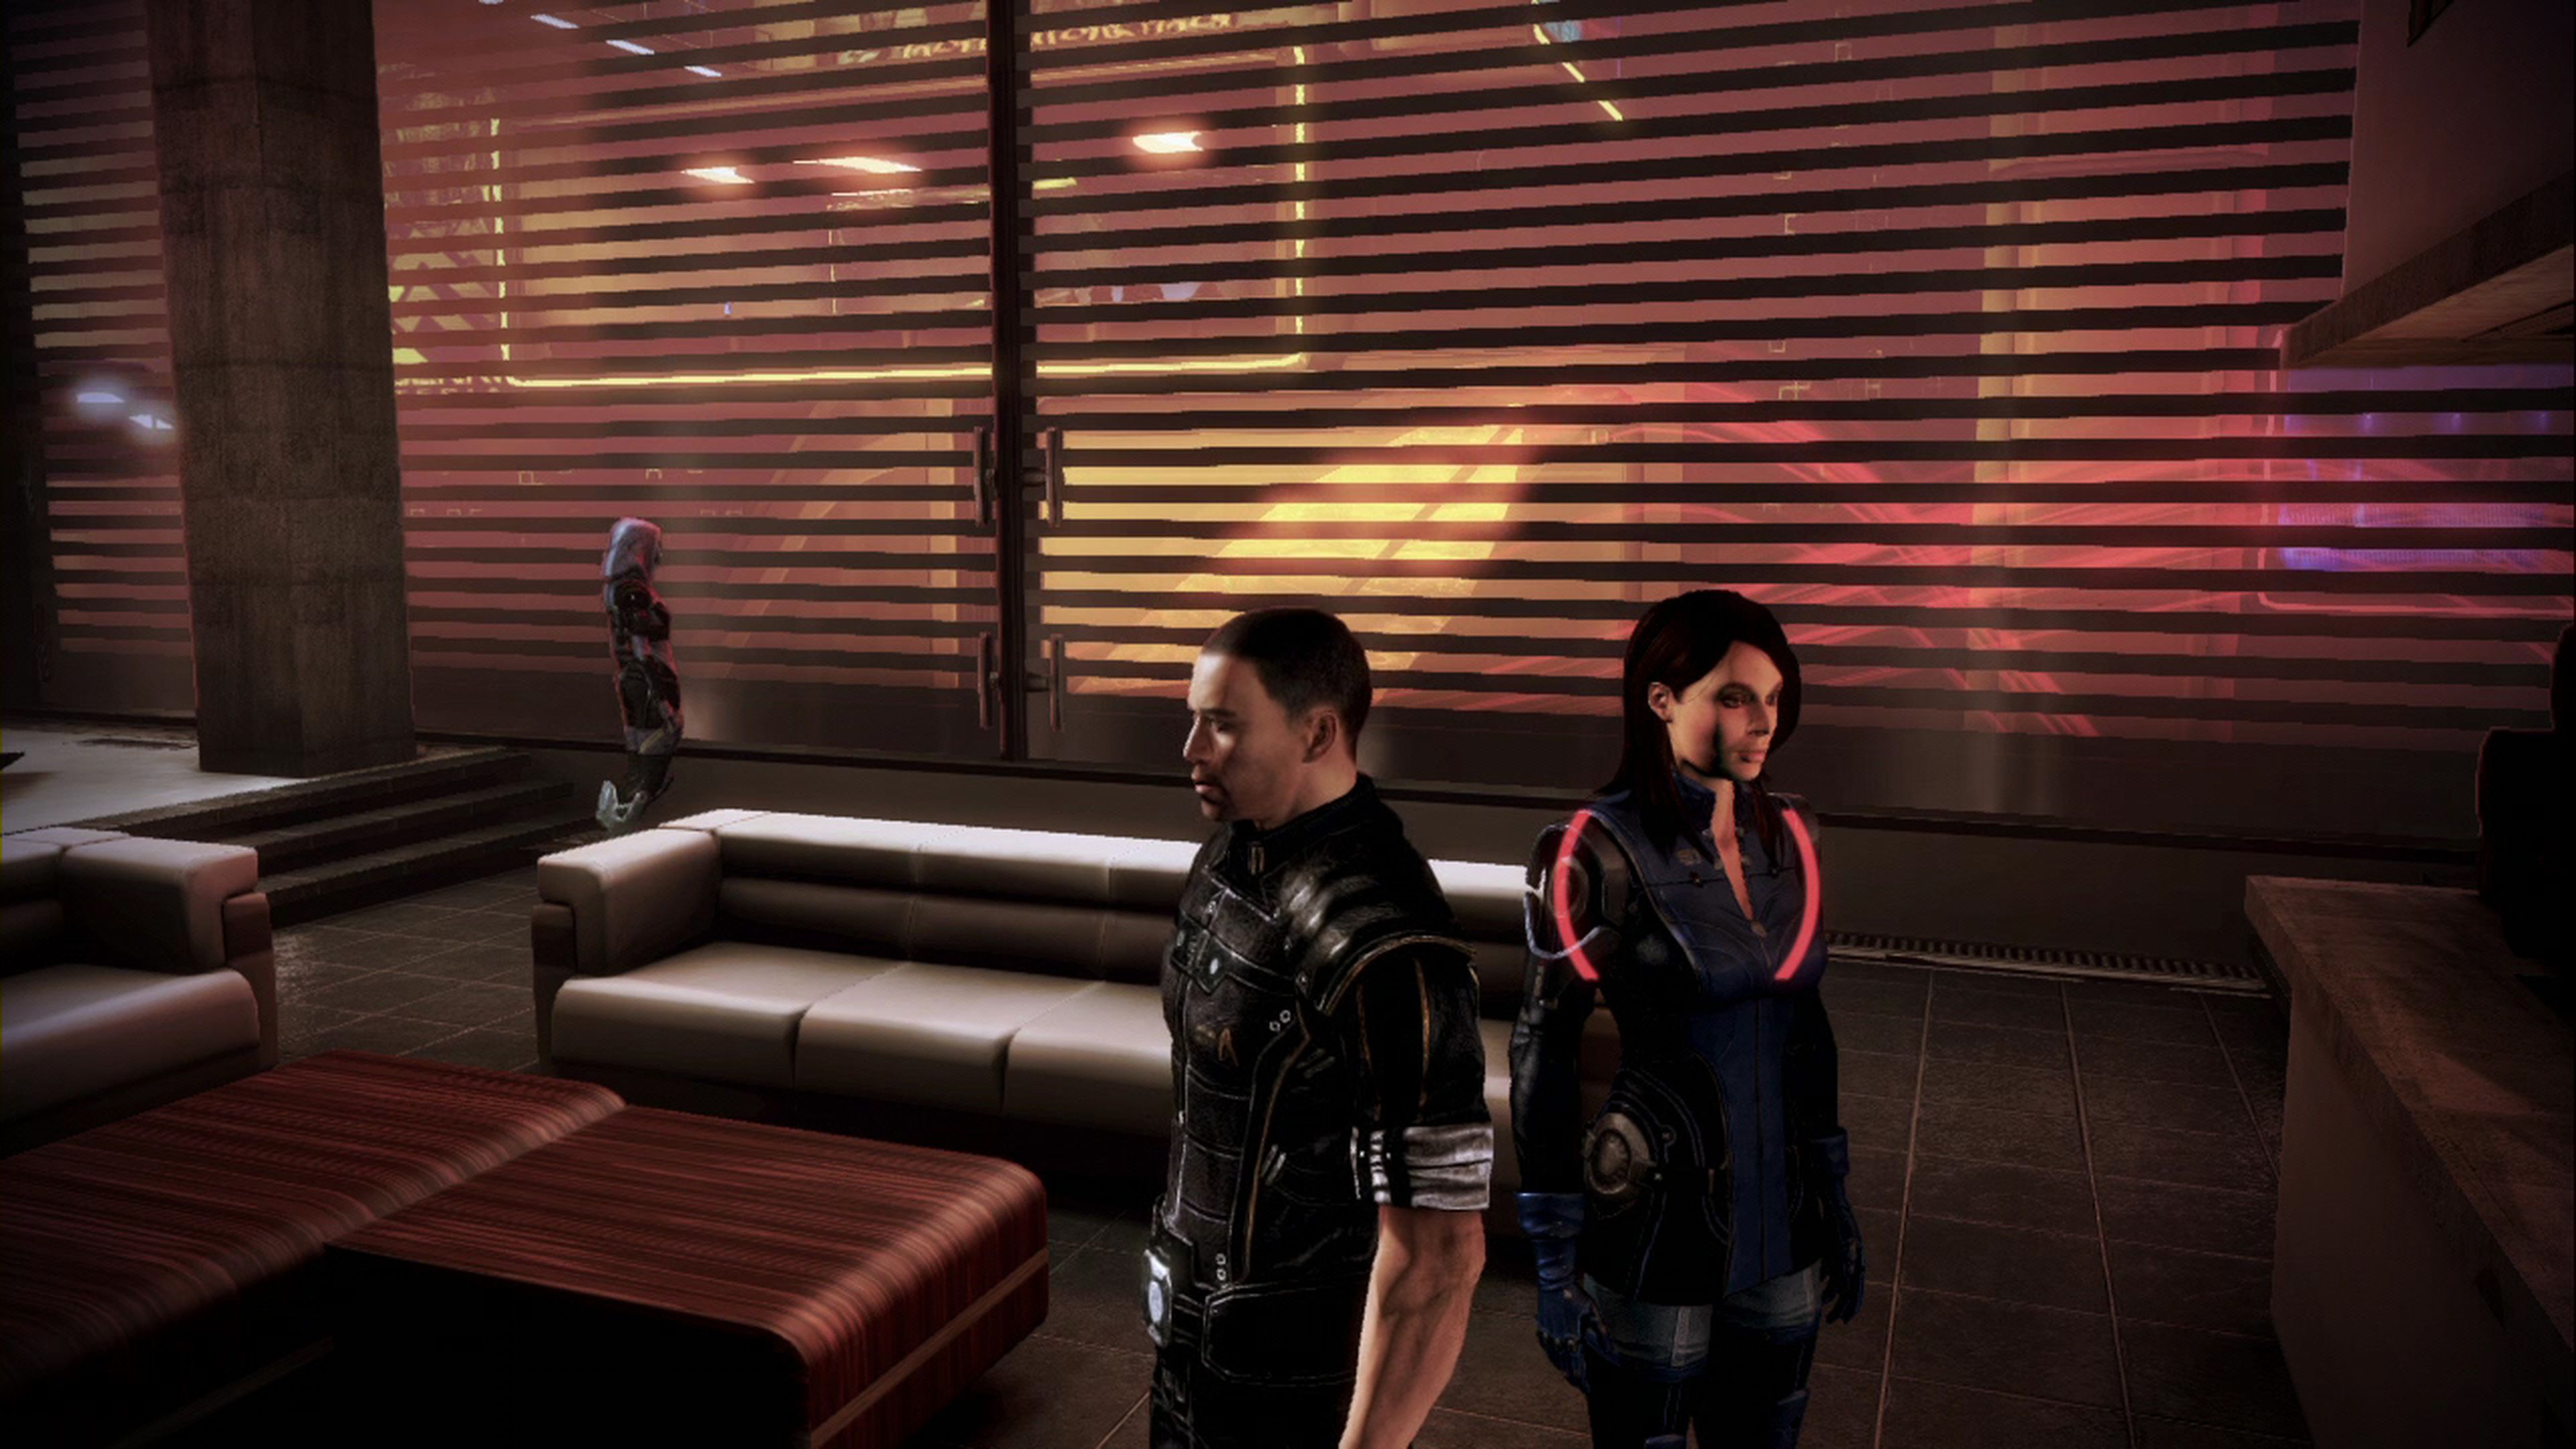 Análisis del DLC La Ciudadela de Mass Effect 3